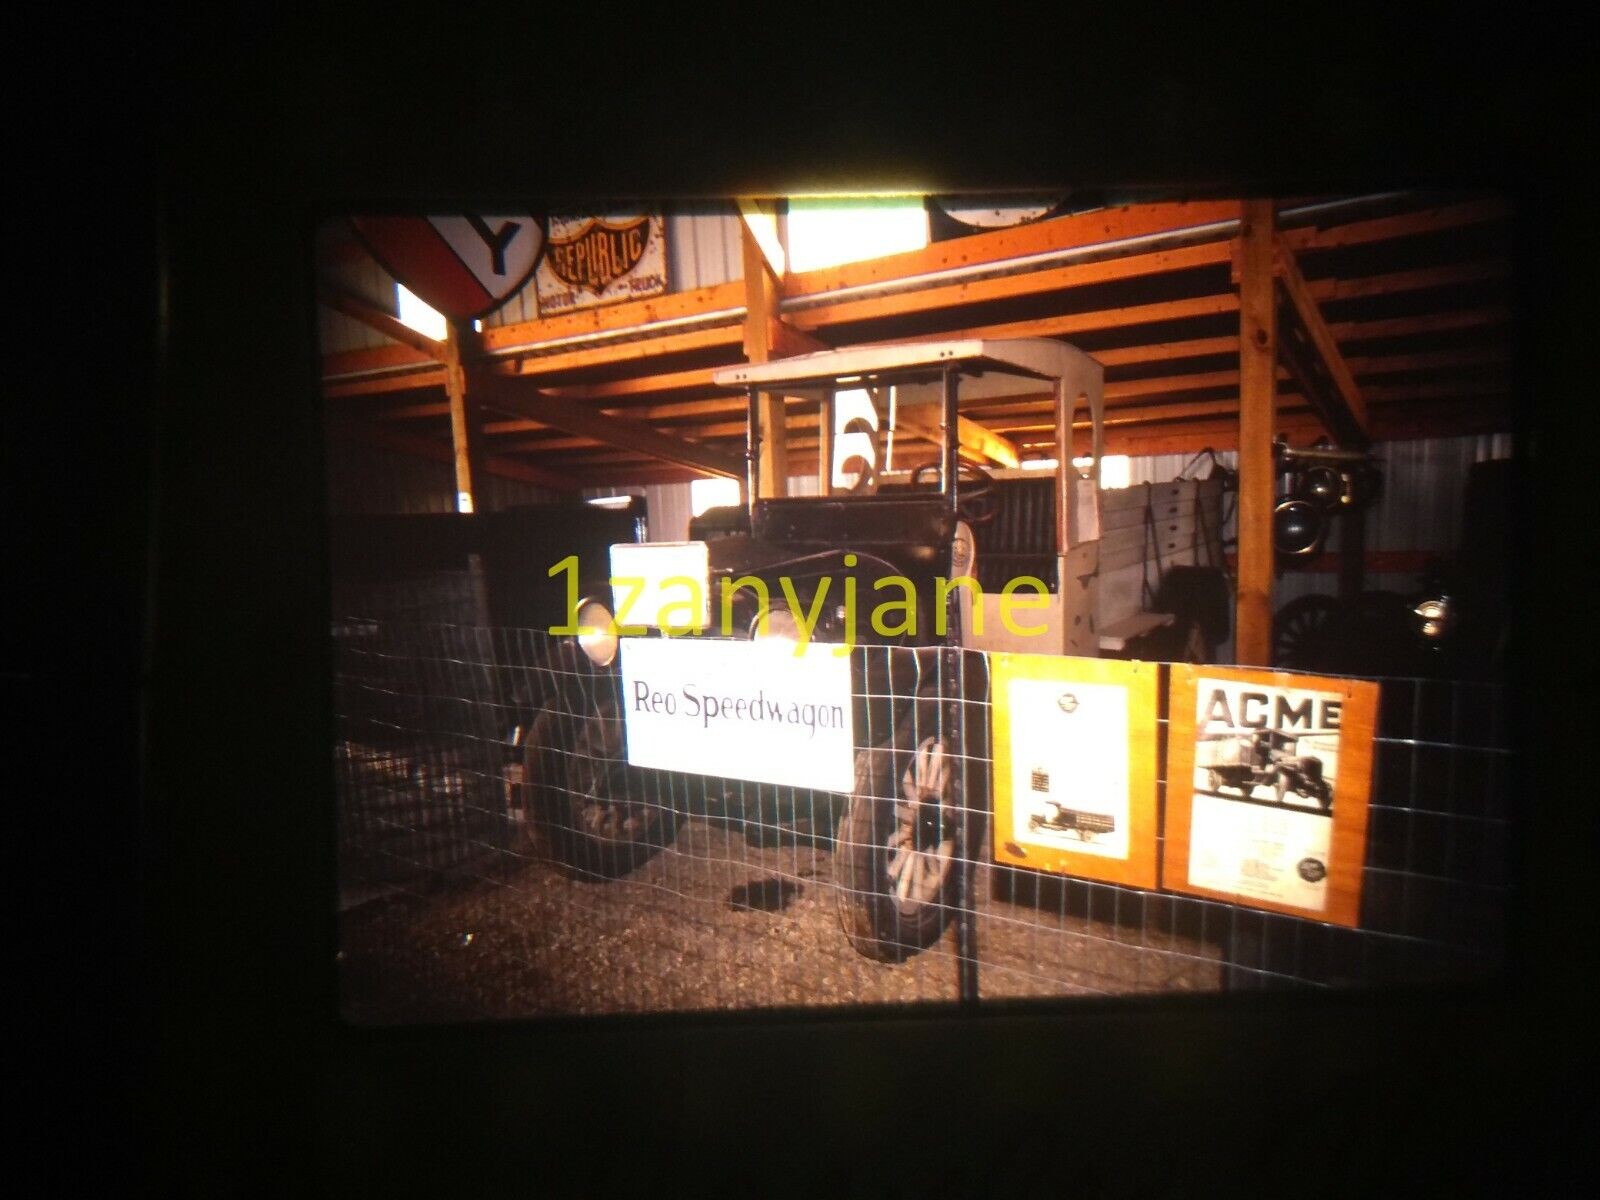 3C17 VINTAGE Photo 35mm Slide 17 REO SPEEDWAGON VAN HORNES REPUBLIC ACME